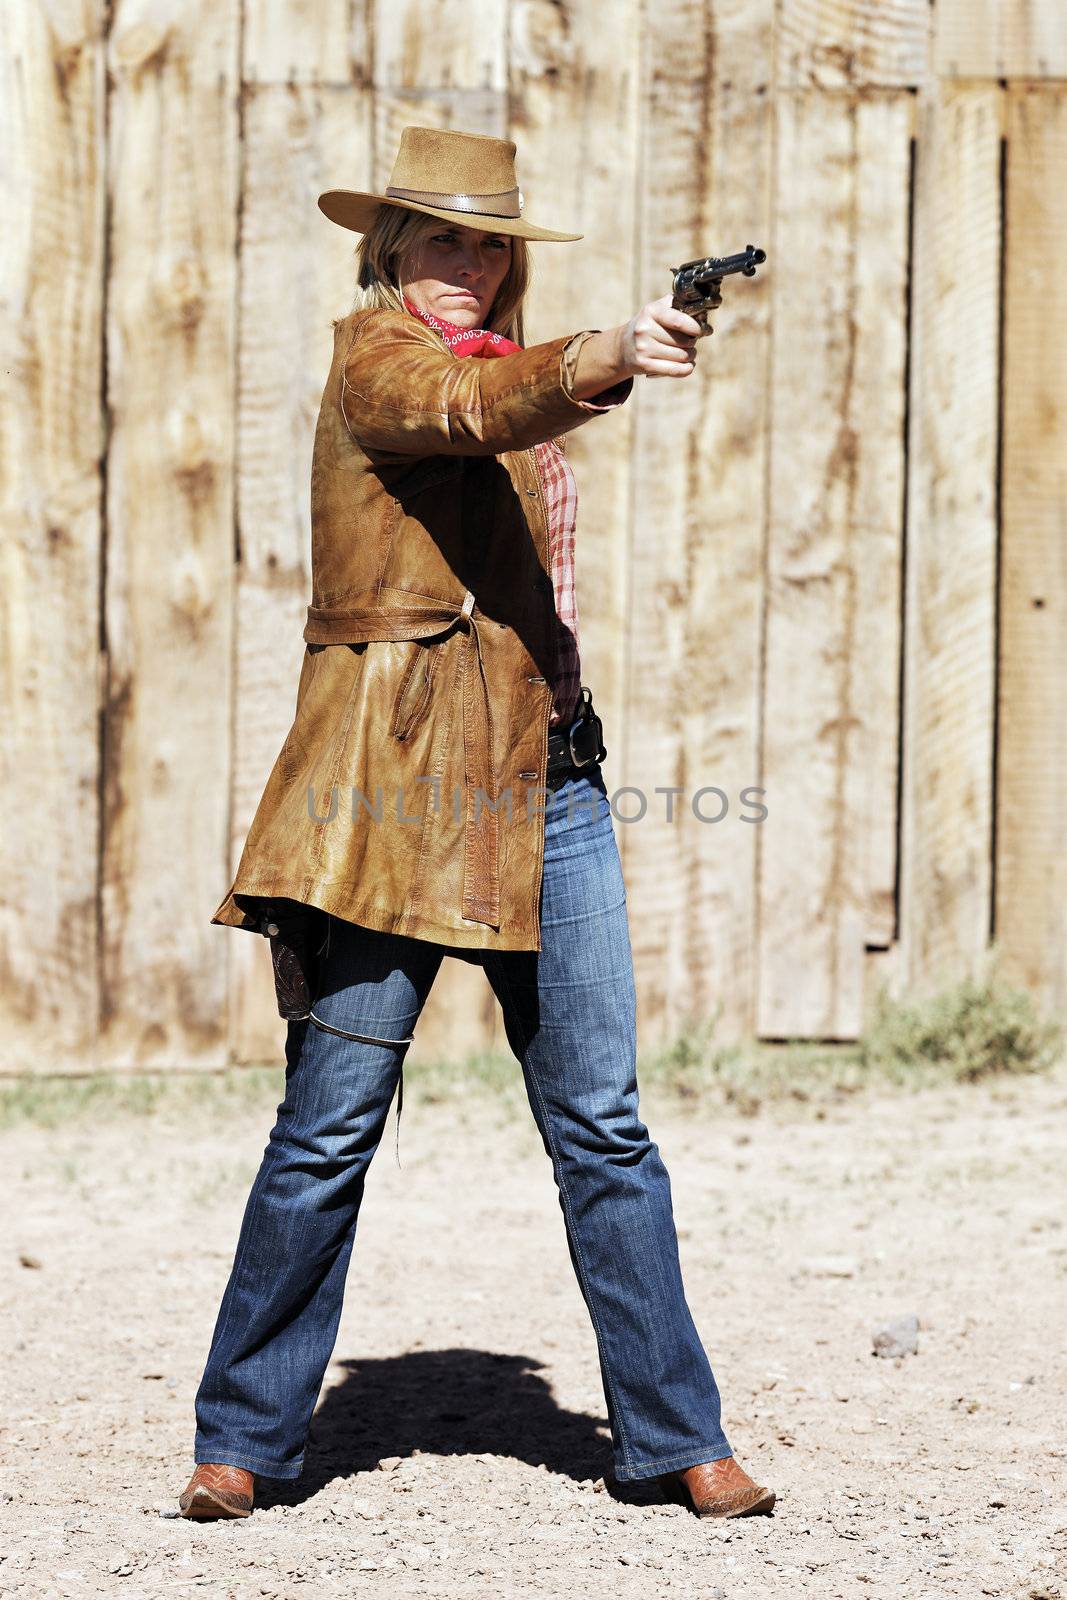 bad girl shooting with a gun 